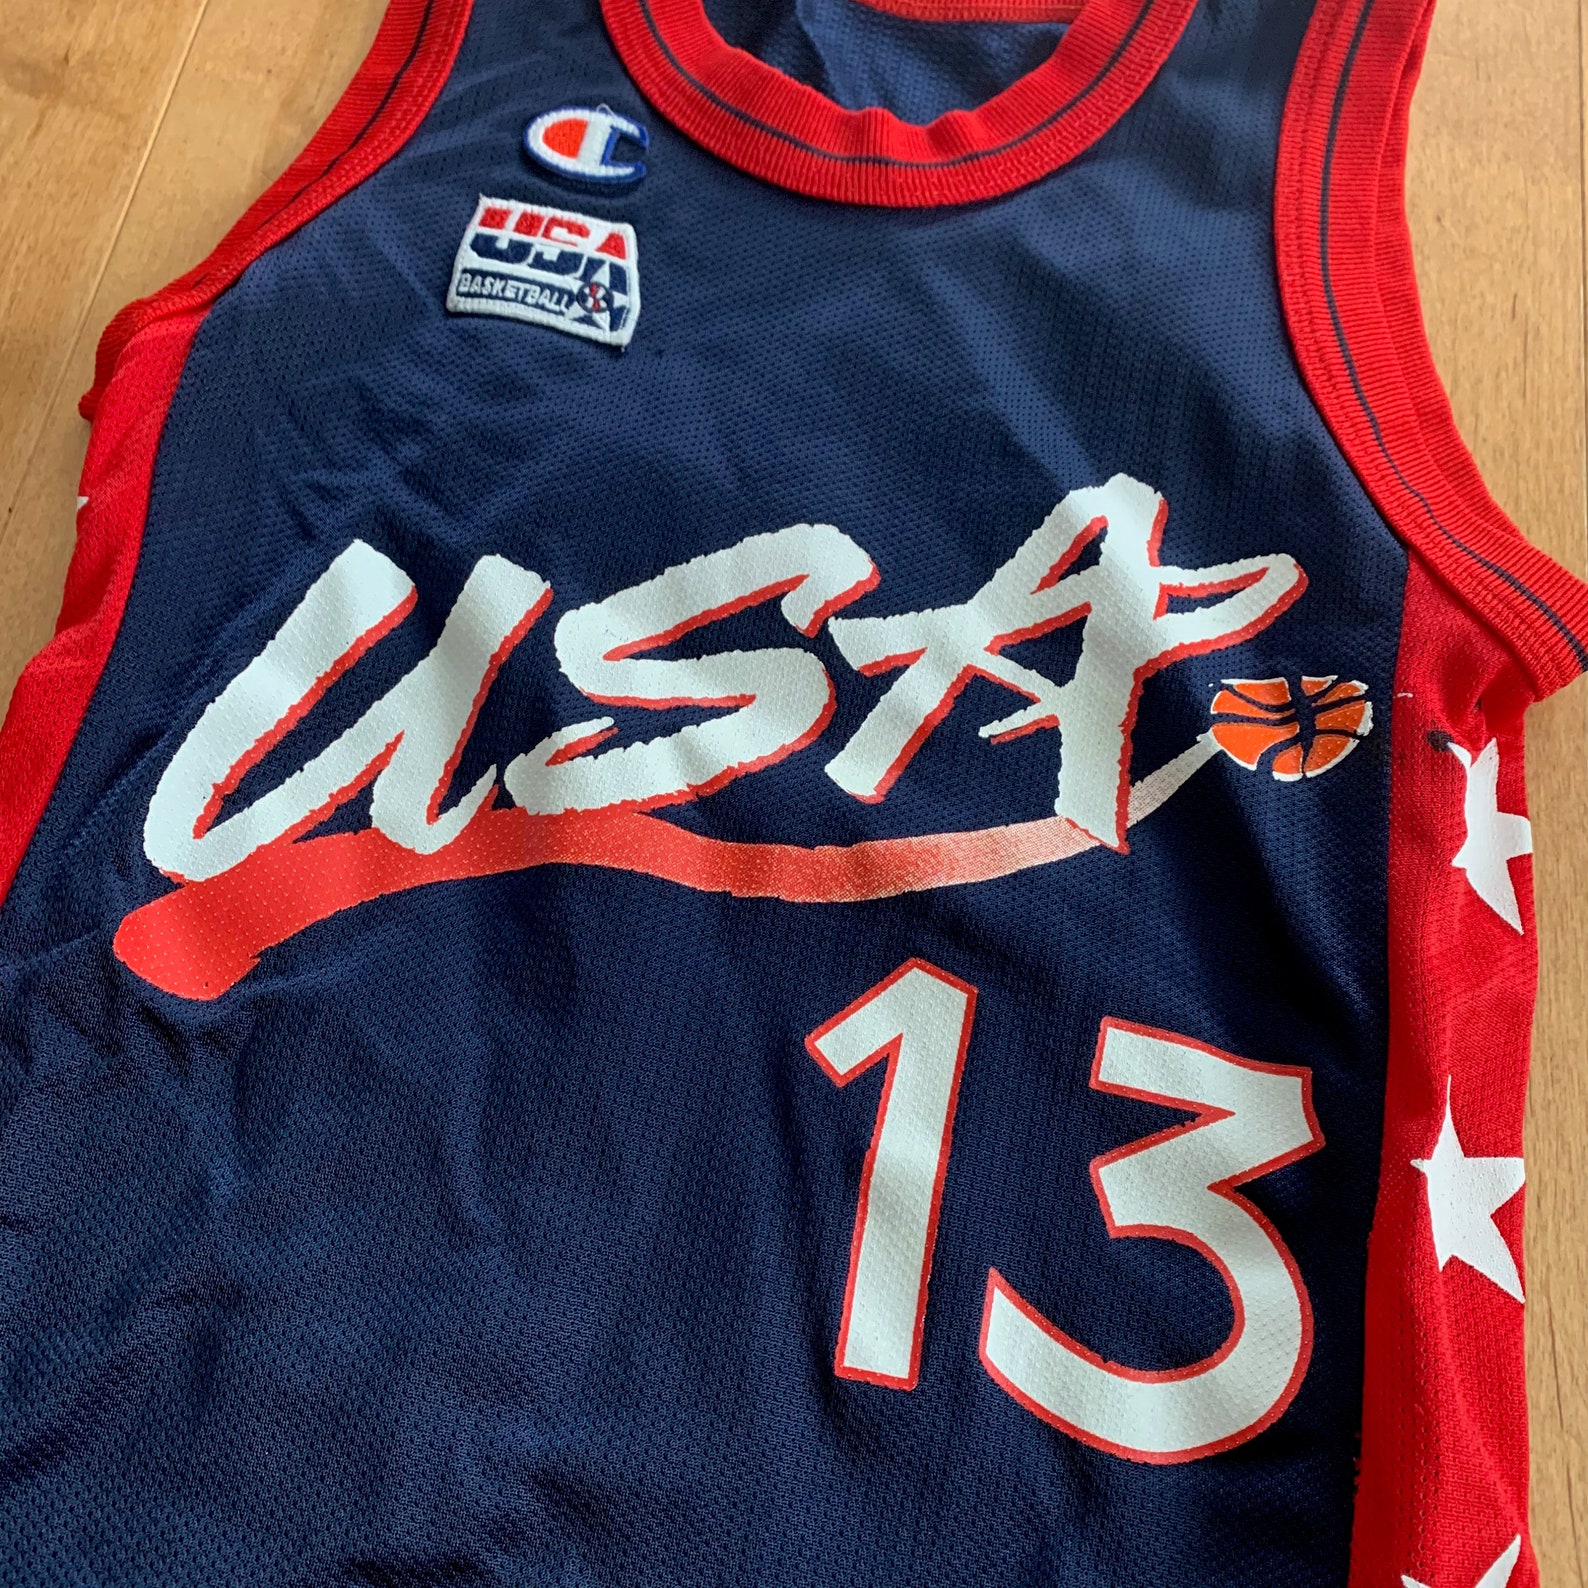 90s Dream Team USA Shaq Kids Basketball Jersey Vintage 1990s - Etsy